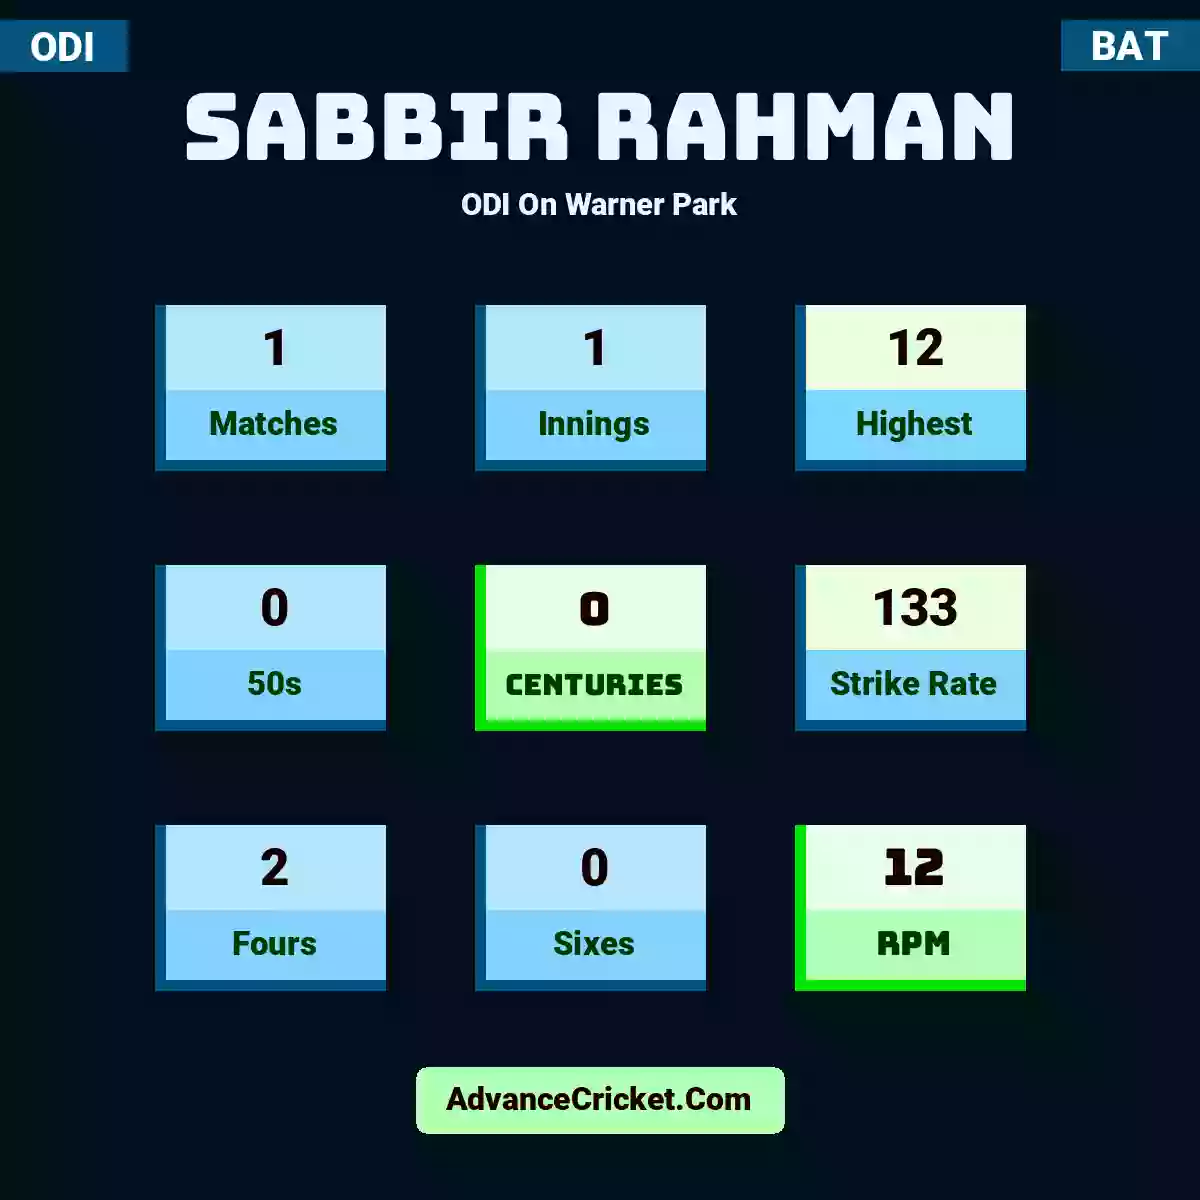 Sabbir Rahman ODI  On Warner Park, Sabbir Rahman played 1 matches, scored 12 runs as highest, 0 half-centuries, and 0 centuries, with a strike rate of 133. S.Rahman hit 2 fours and 0 sixes, with an RPM of 12.